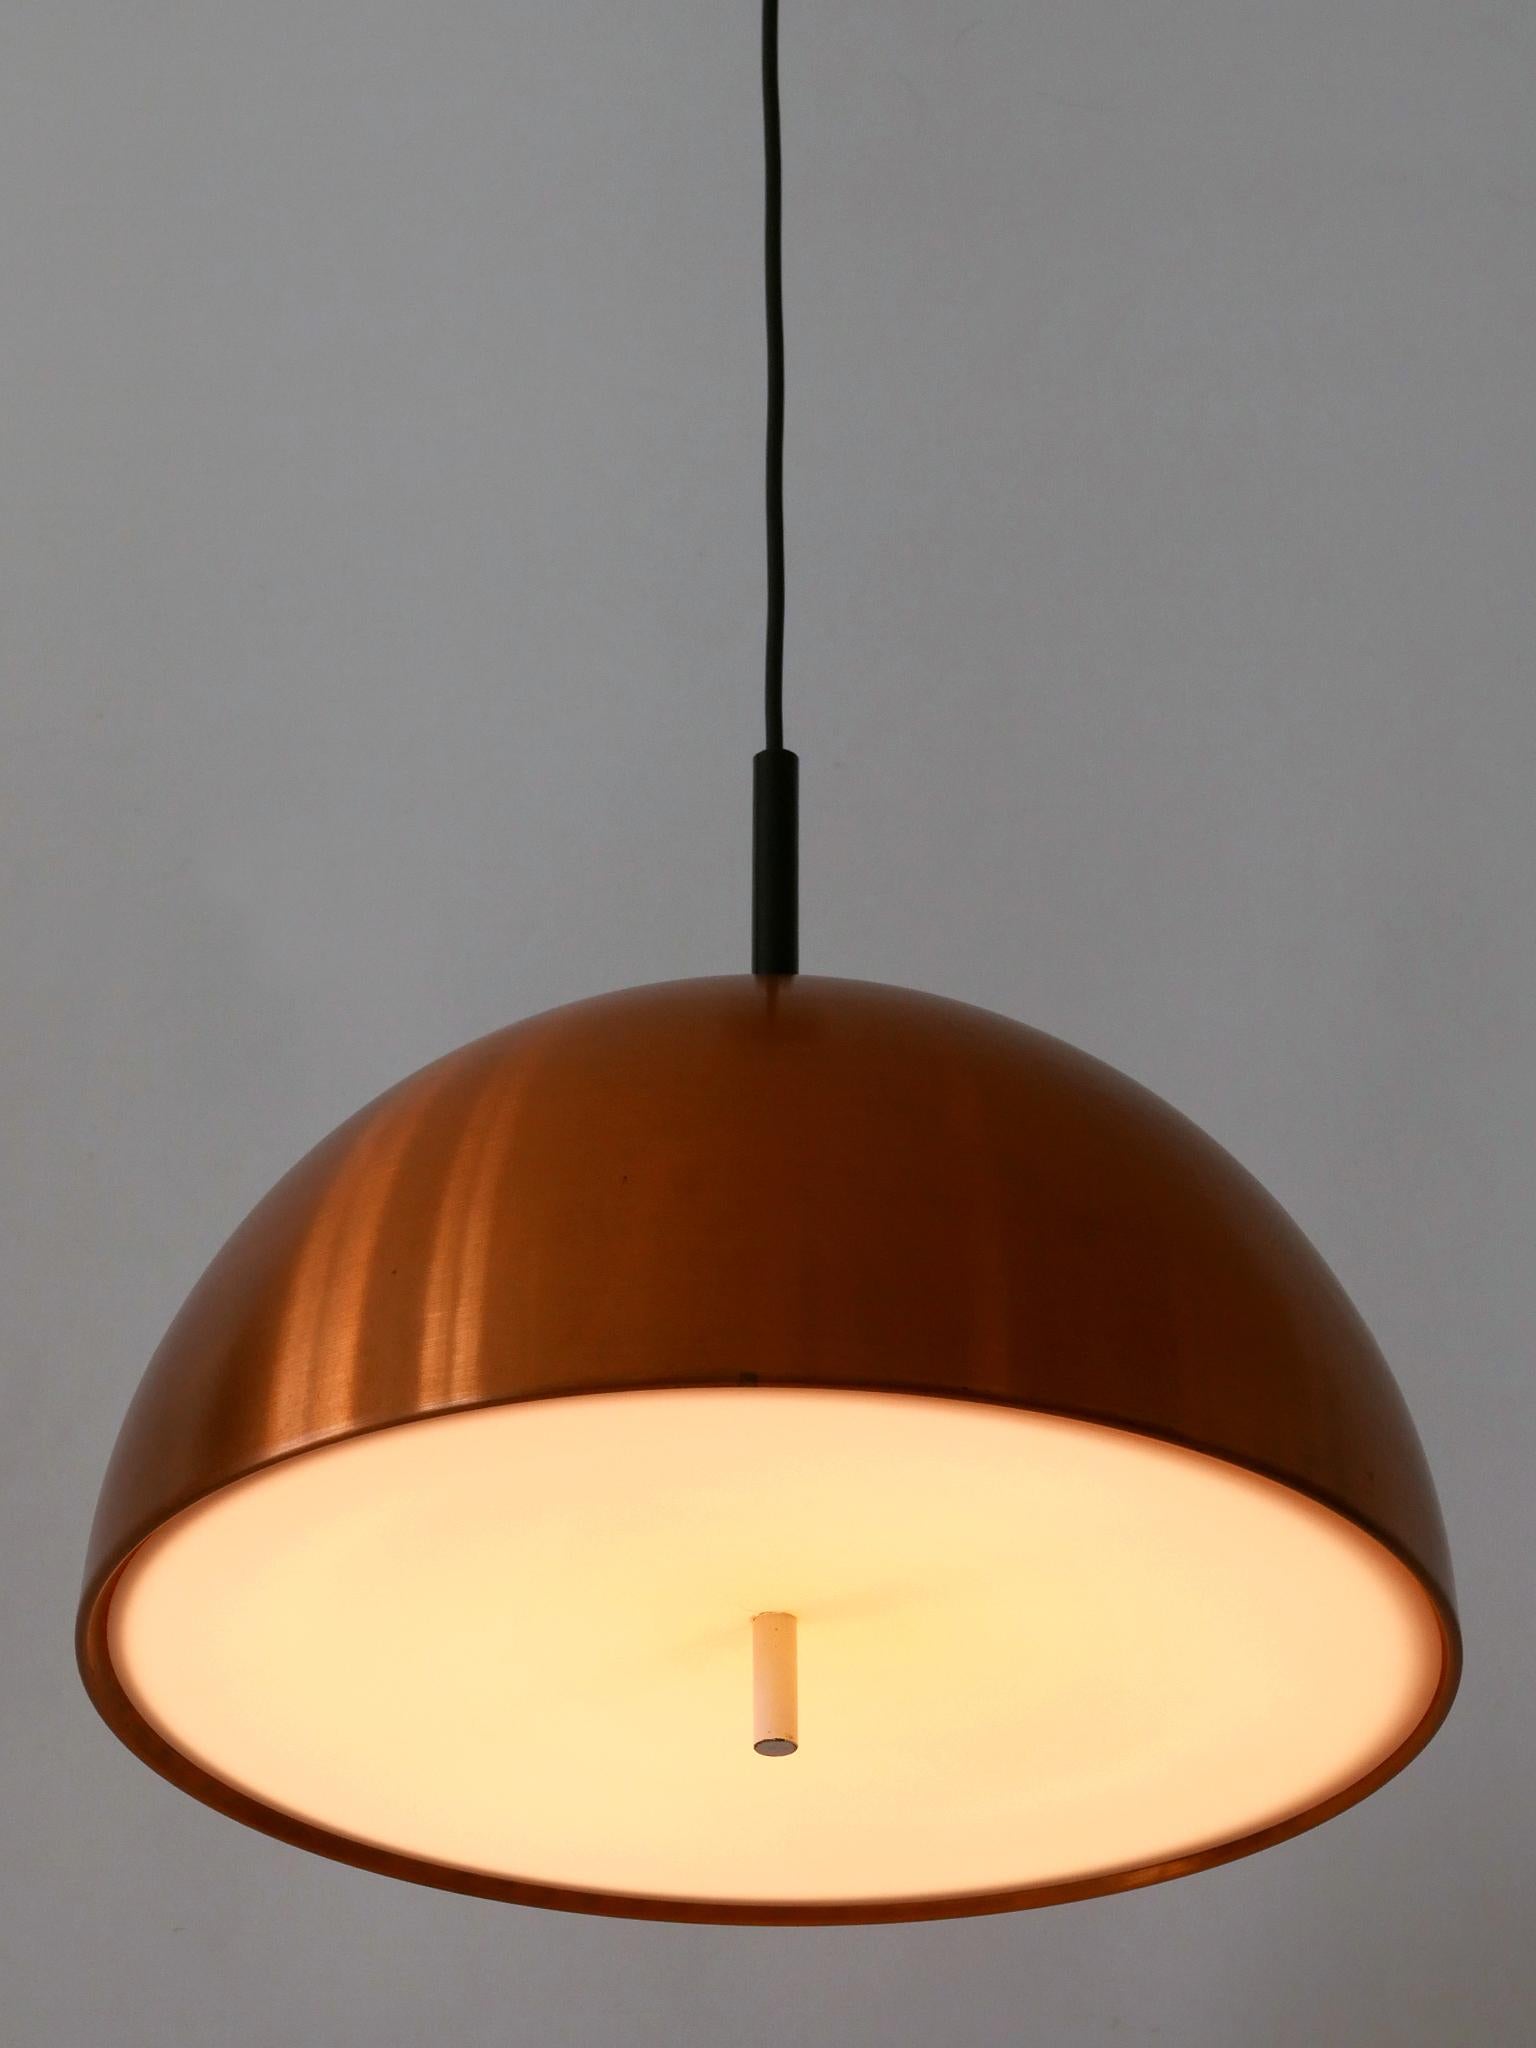 Elegant Mid-Century Modern Copper Pendant Lamp by Staff & Schwarz Germany 1960s For Sale 2